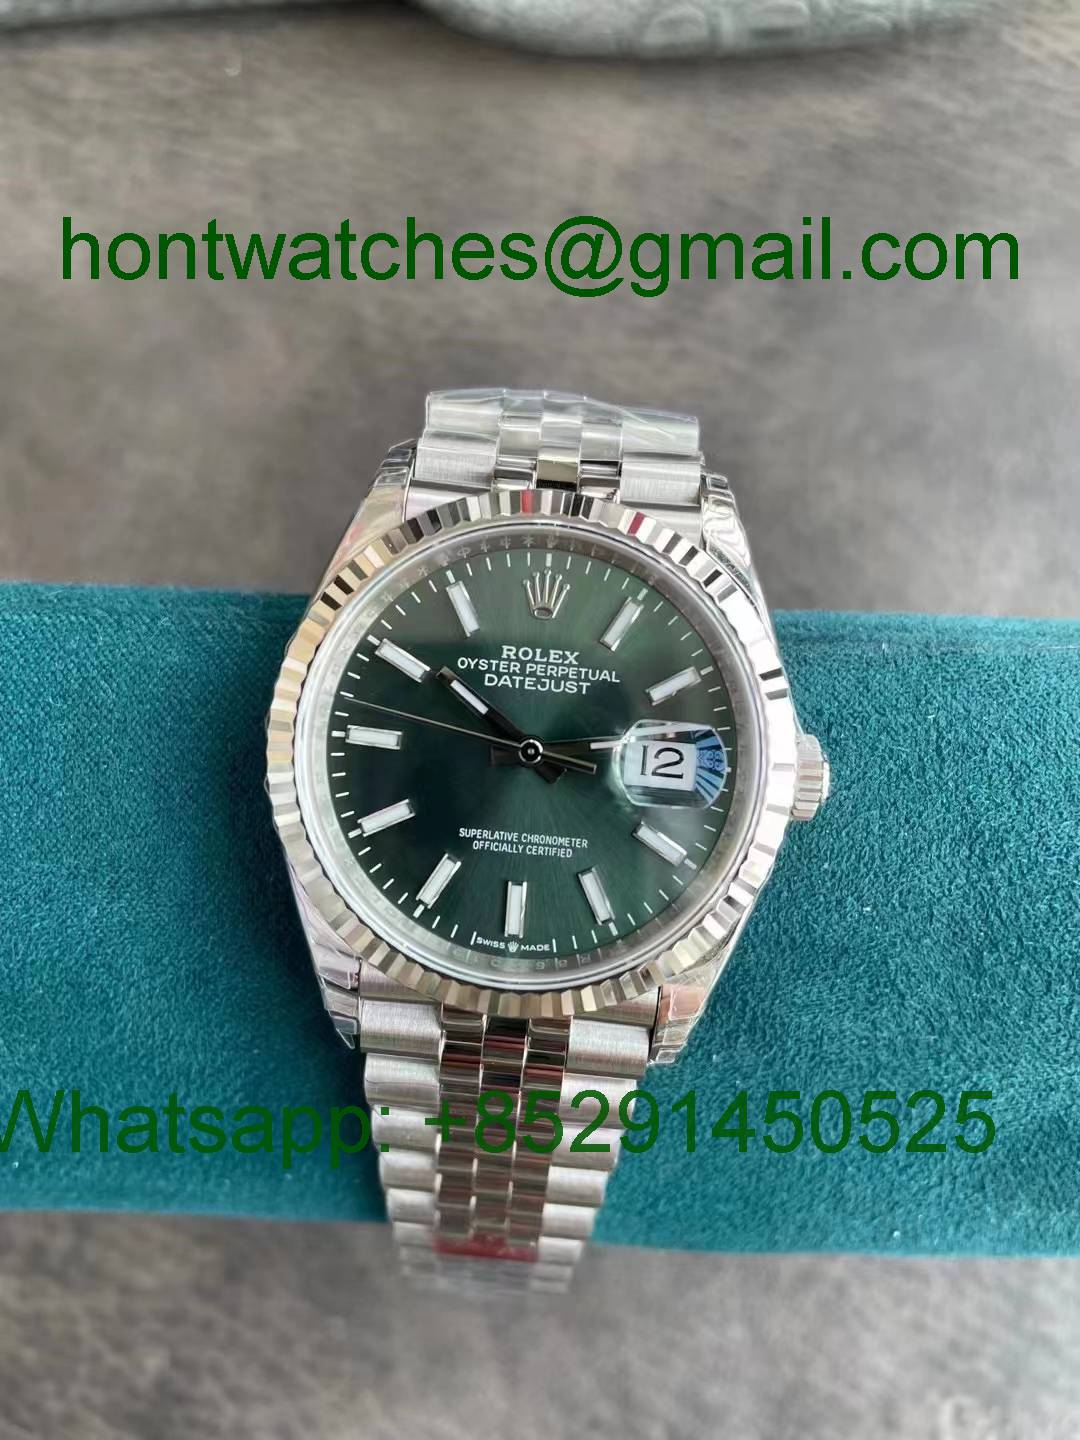 Replica,Rolex,Datejust,126234,VSF,1:1,Best,Hontwatch,Wholesale